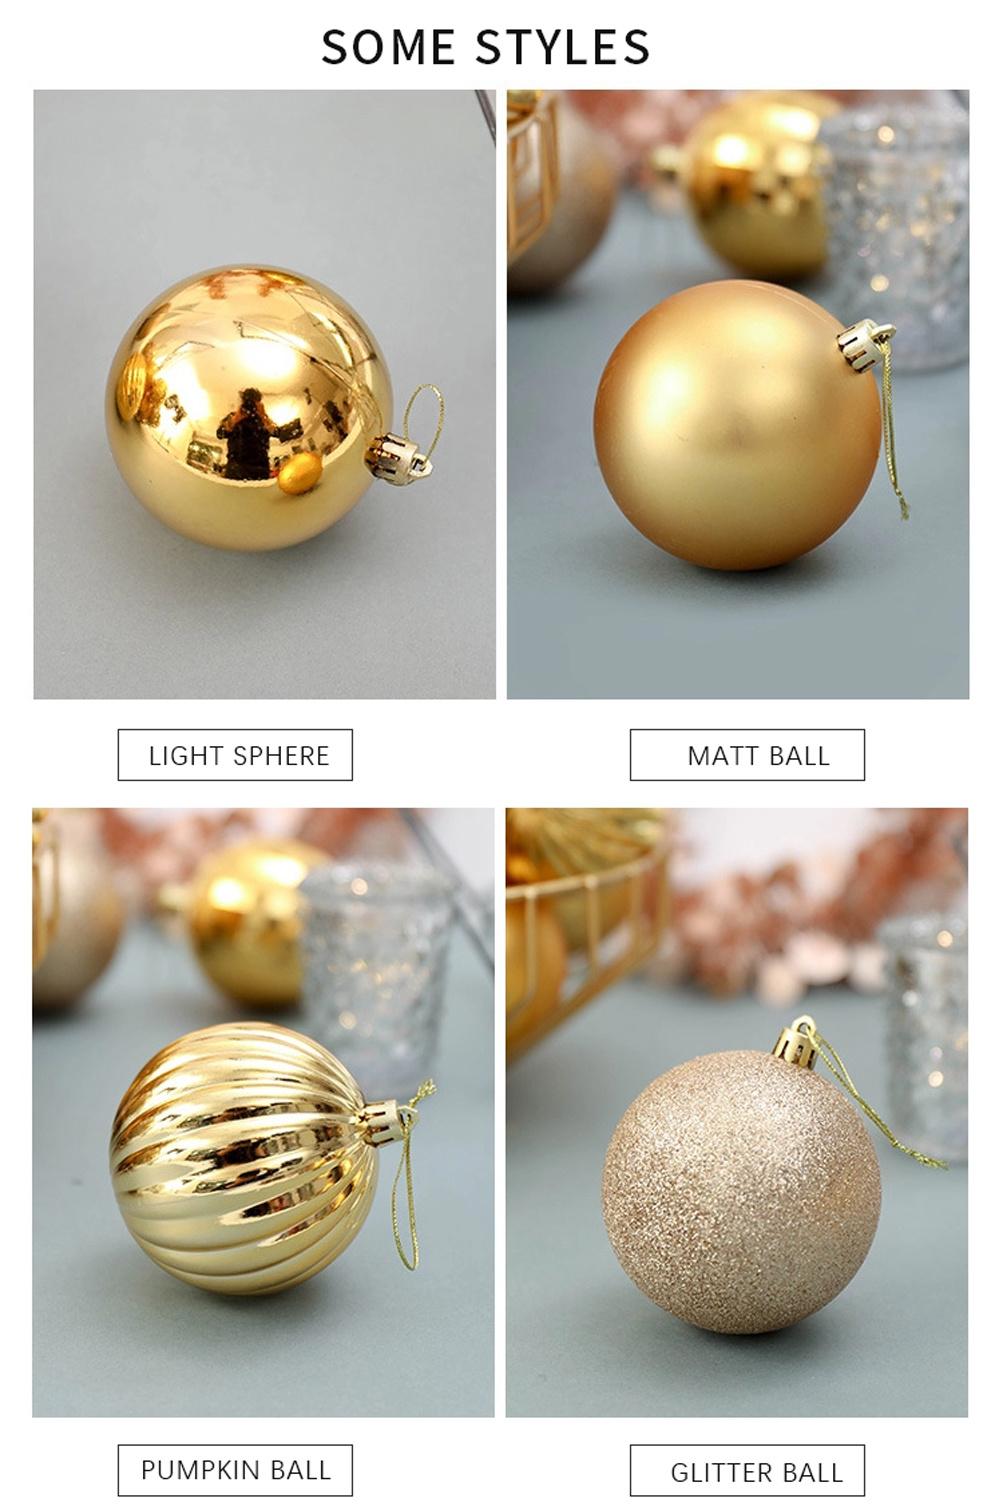 Decorating Colours Shiny Merry Glass Christmas/Xmas Balls